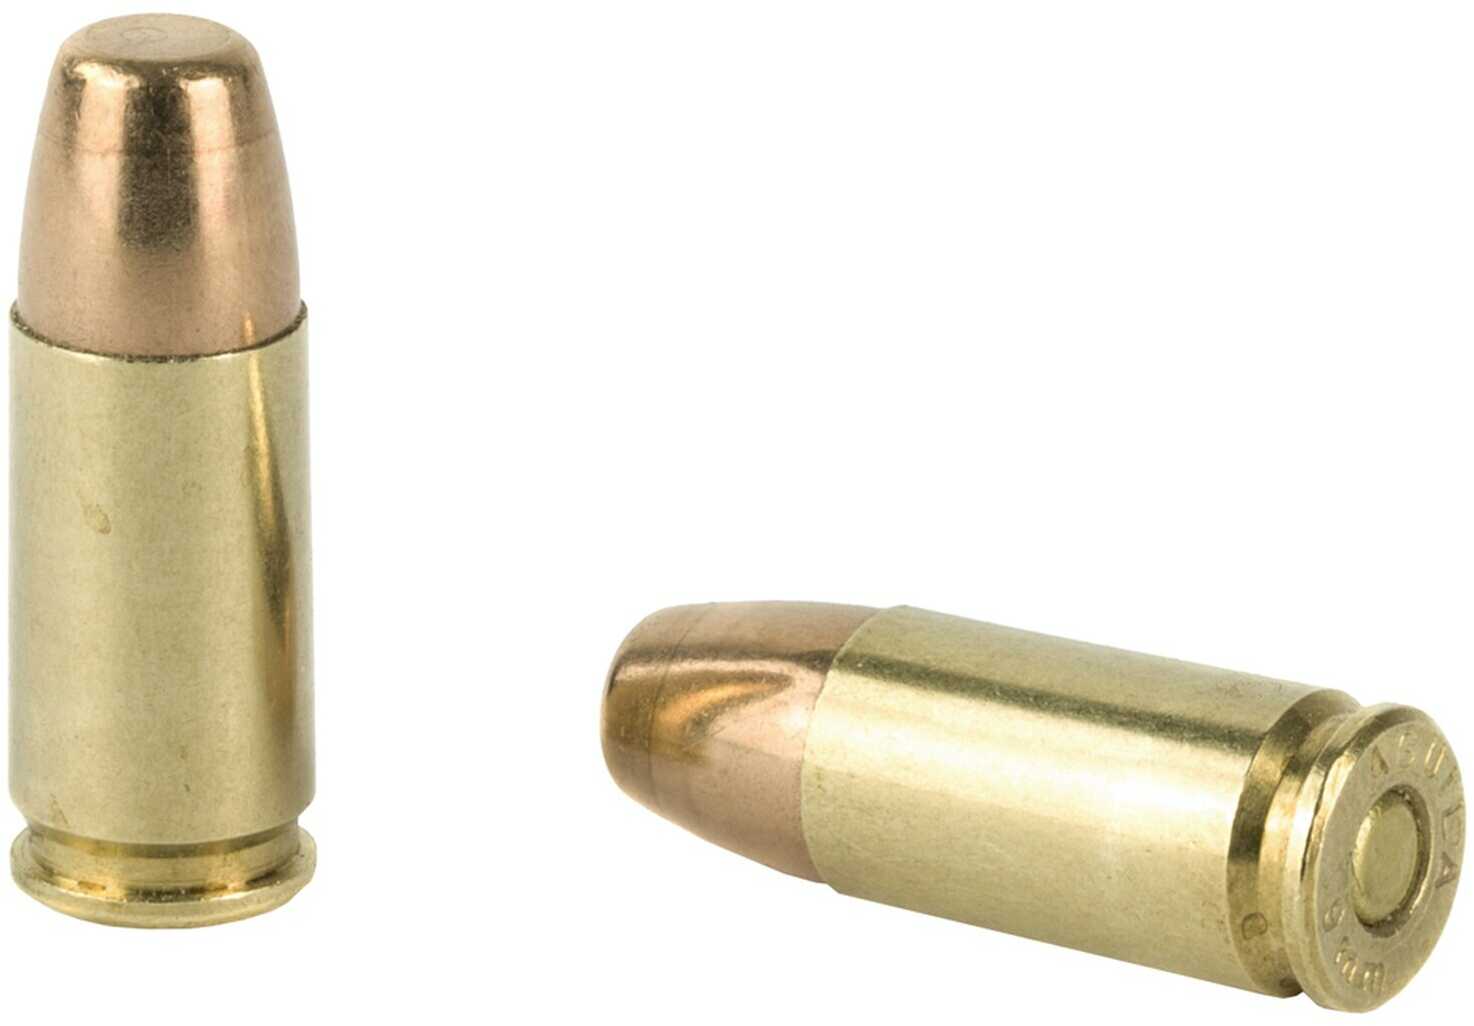 9mm Luger 50 Rounds Ammunition Aguila 147 Grain Full Metal Jacket